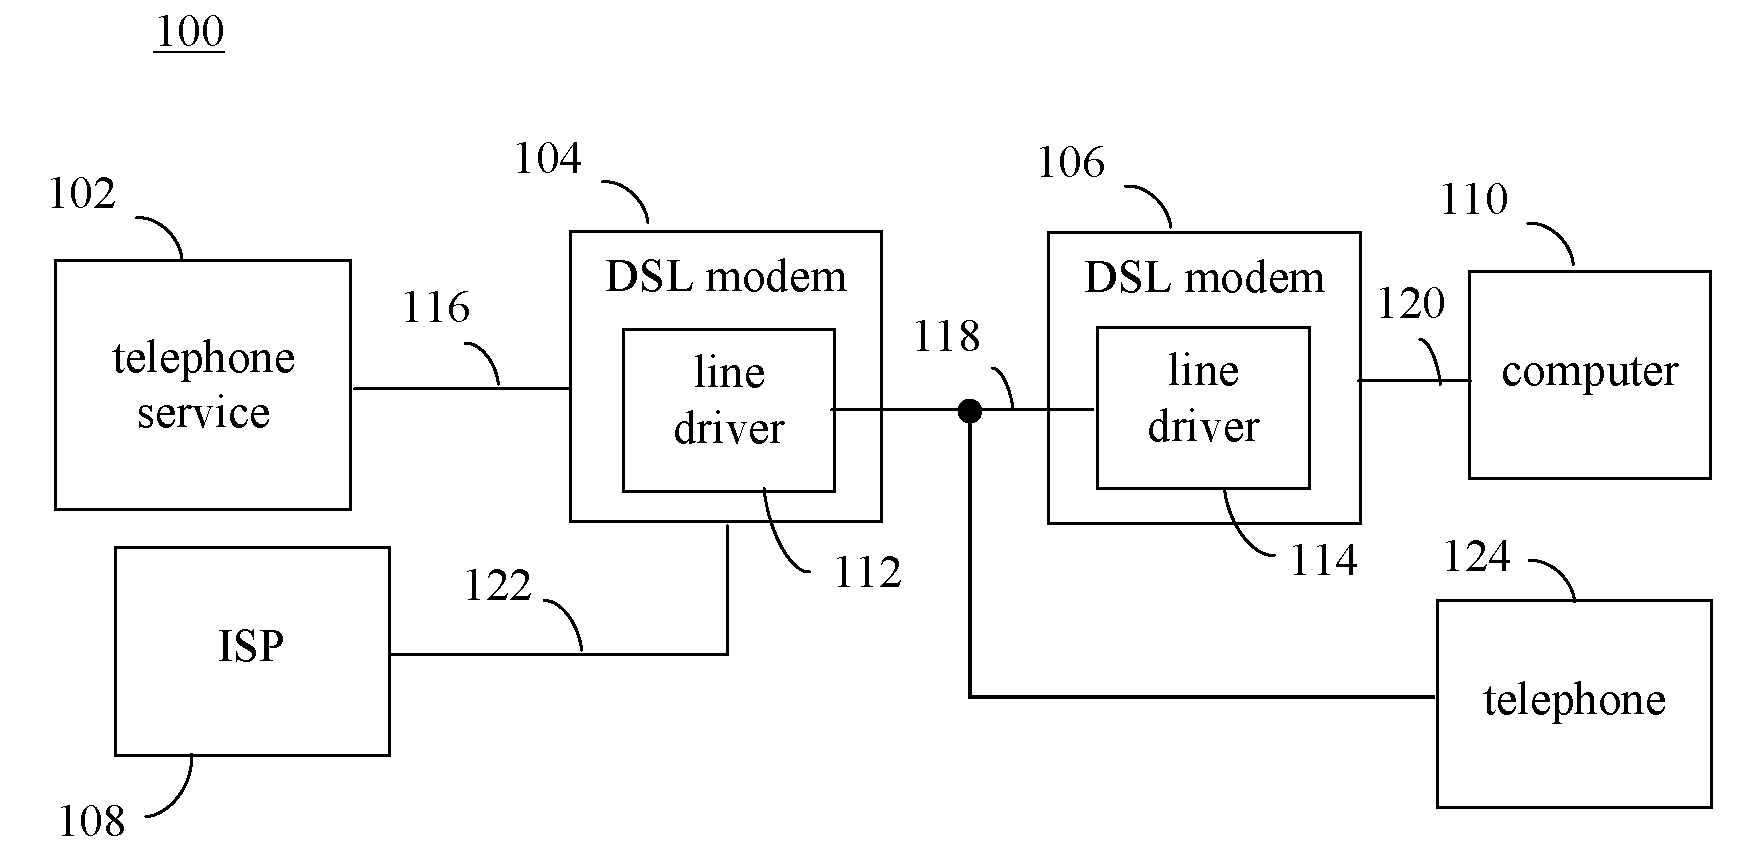 Multimode DSL line driver